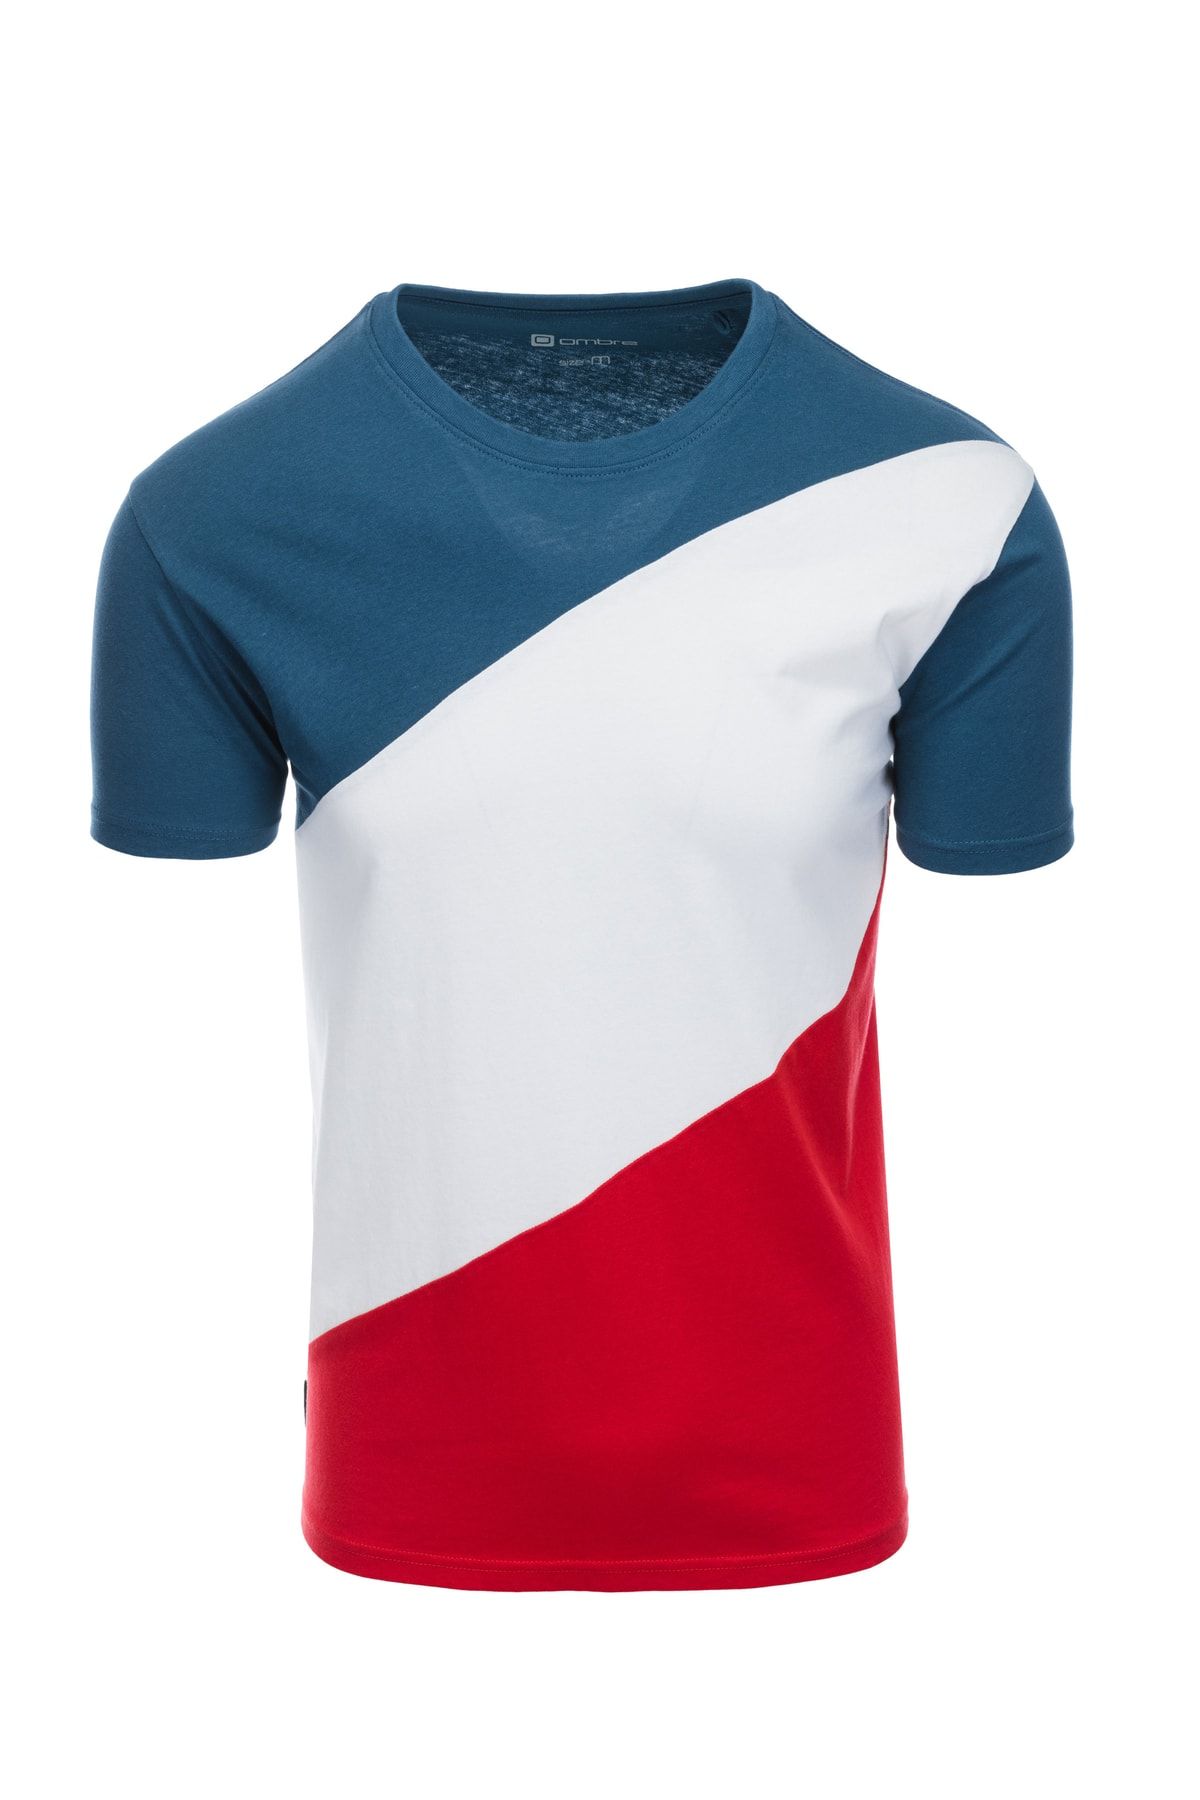 Trendyol Fit Regular - OMBRE - Mehrfarbig - T-Shirt